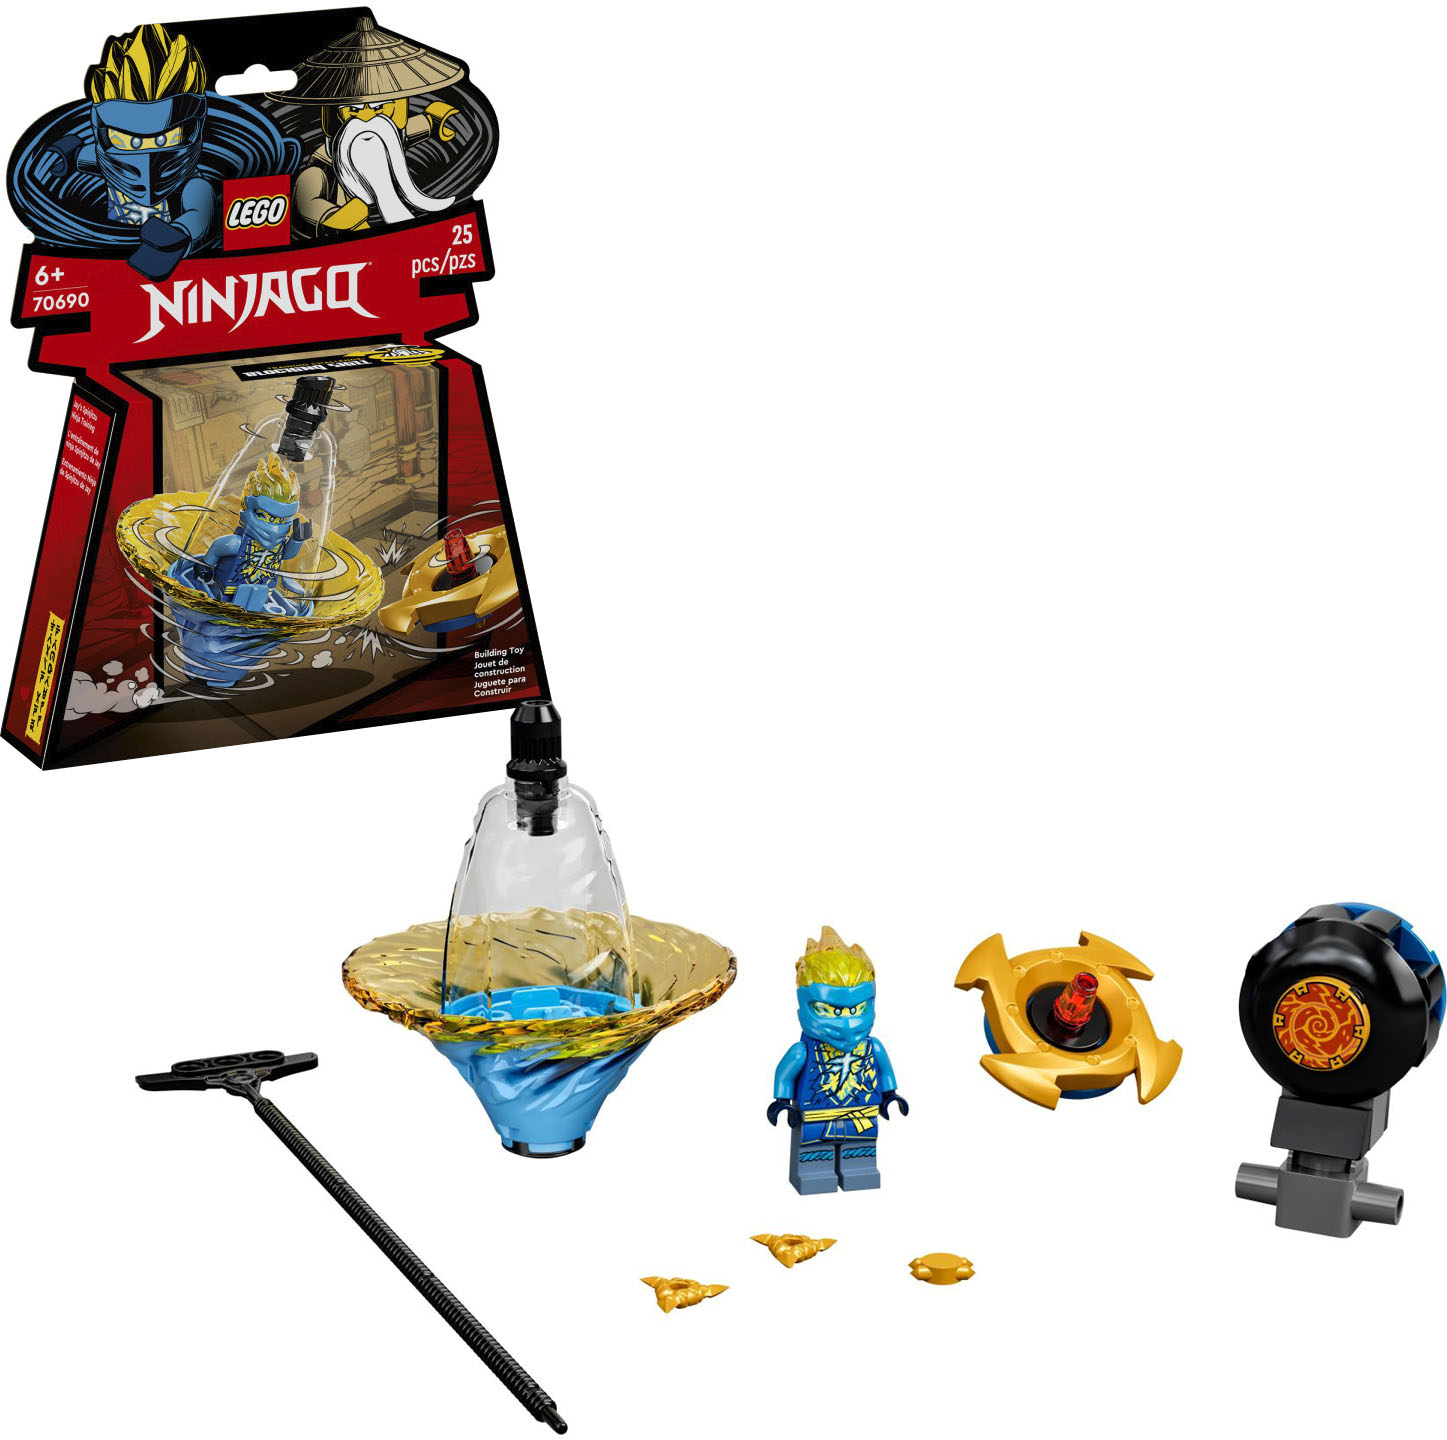 Isolere pædagog Topmøde LEGO NINJAGO Jays Spinjitzu Ninja Training 70690 Building Kit (25 Pieces)  6378907 - Best Buy